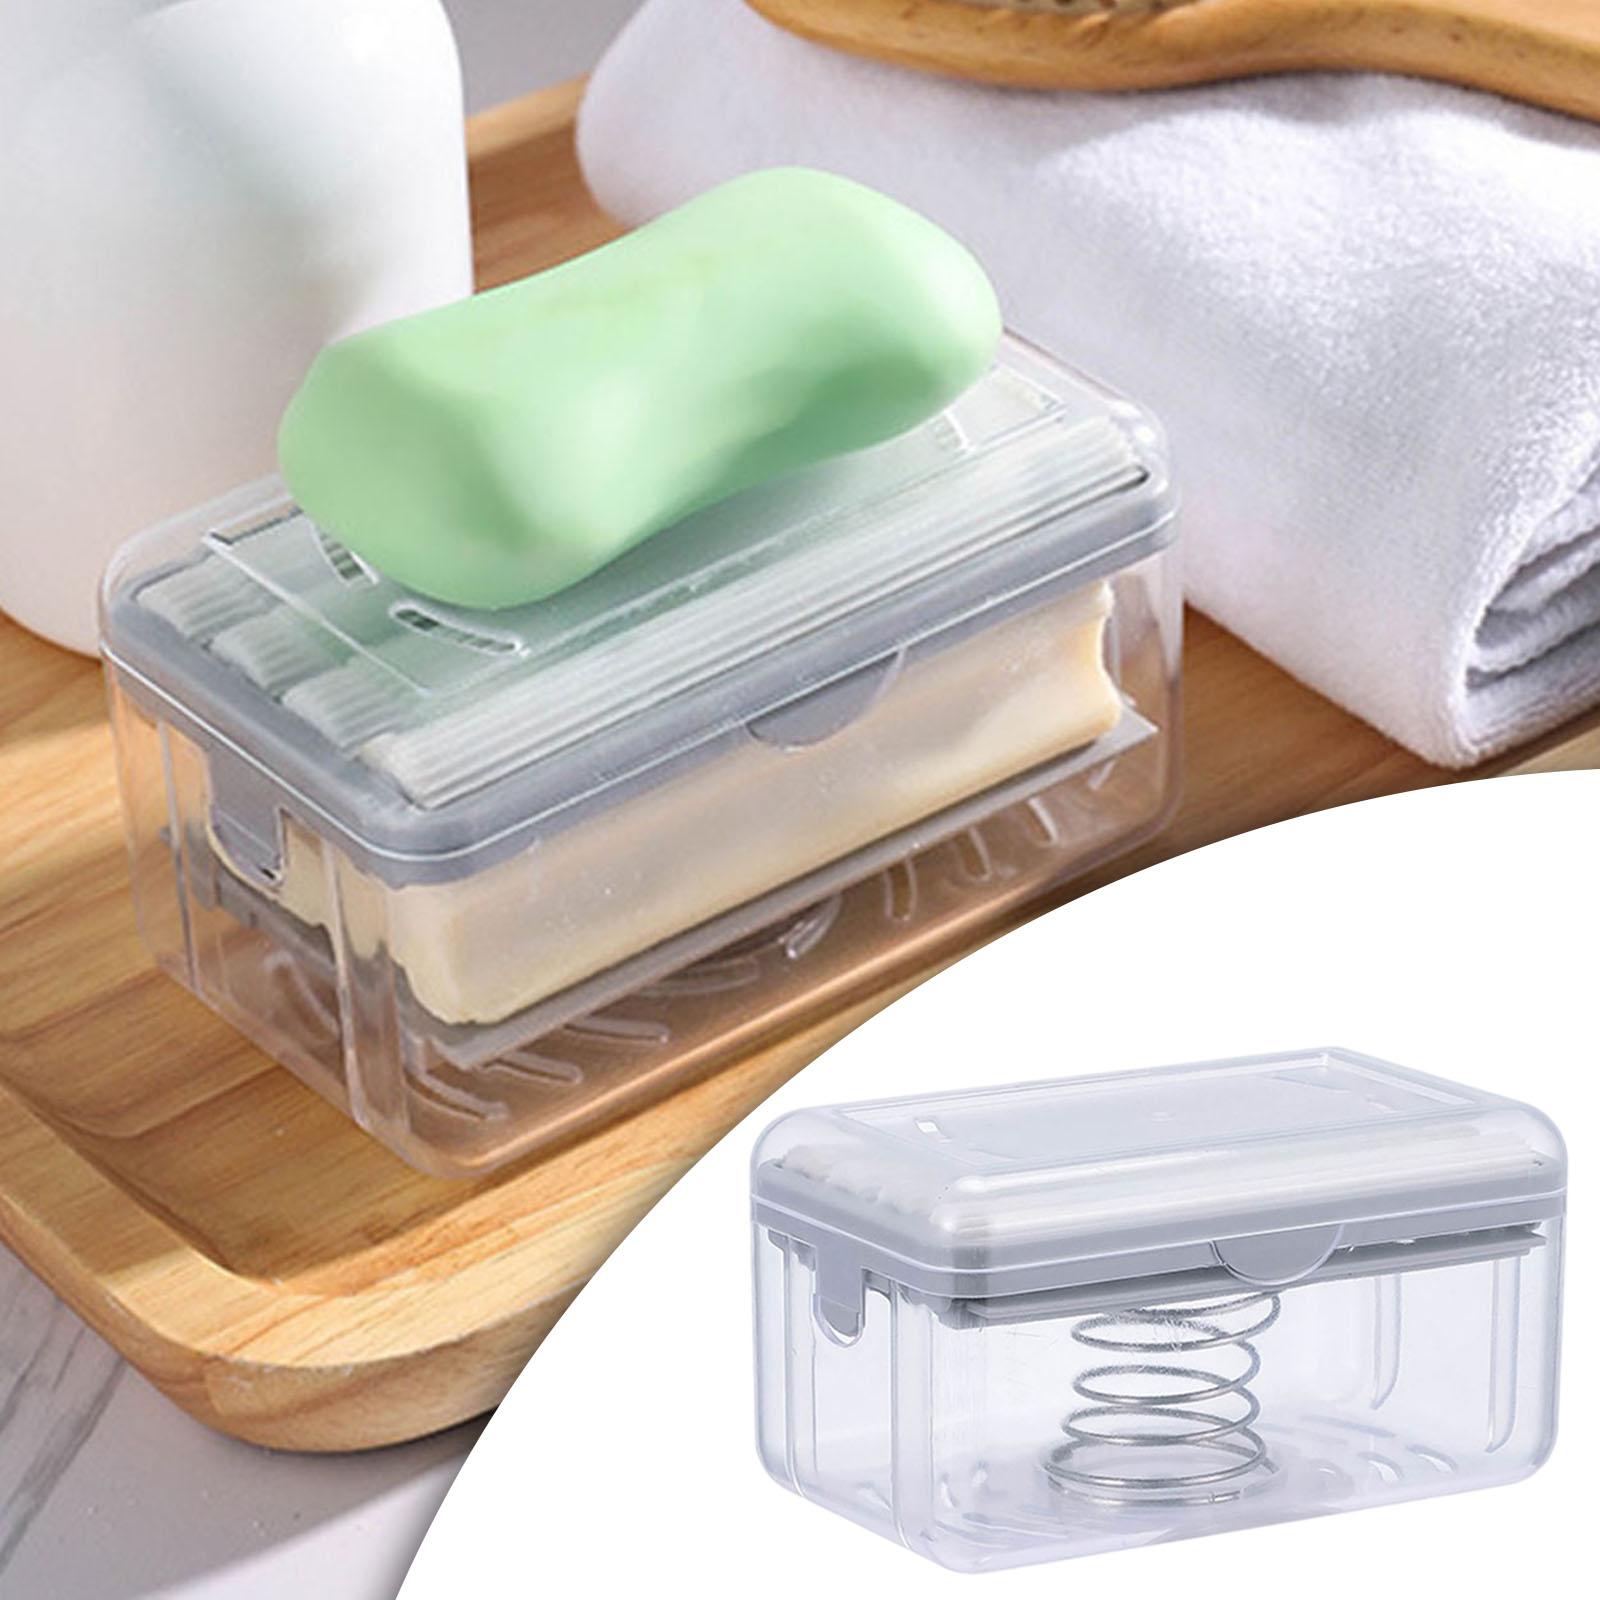 Multifunctio Sponge Bath Soap Box Dish Home Case Container Holder G 